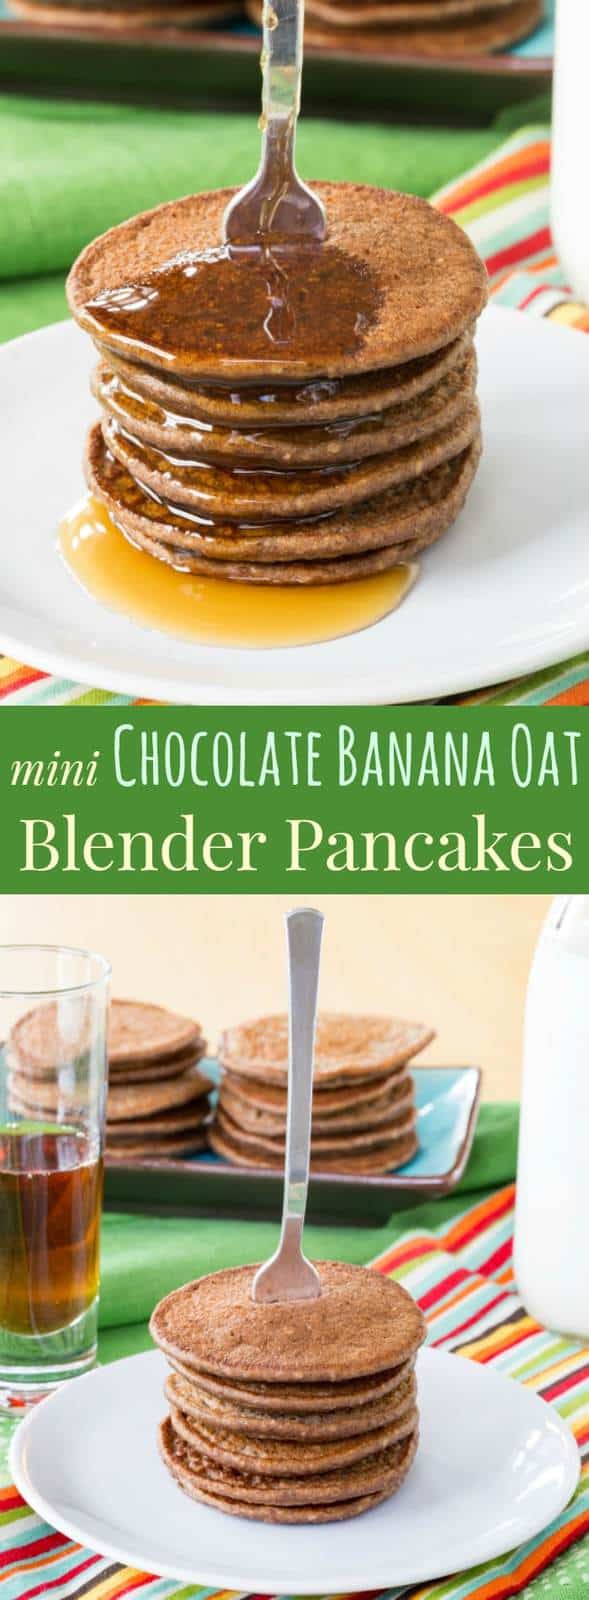 Mini Chocolate Banana Oat Blender Pancakes - Cupcakes ... - 589 x 1600 jpeg 67kB